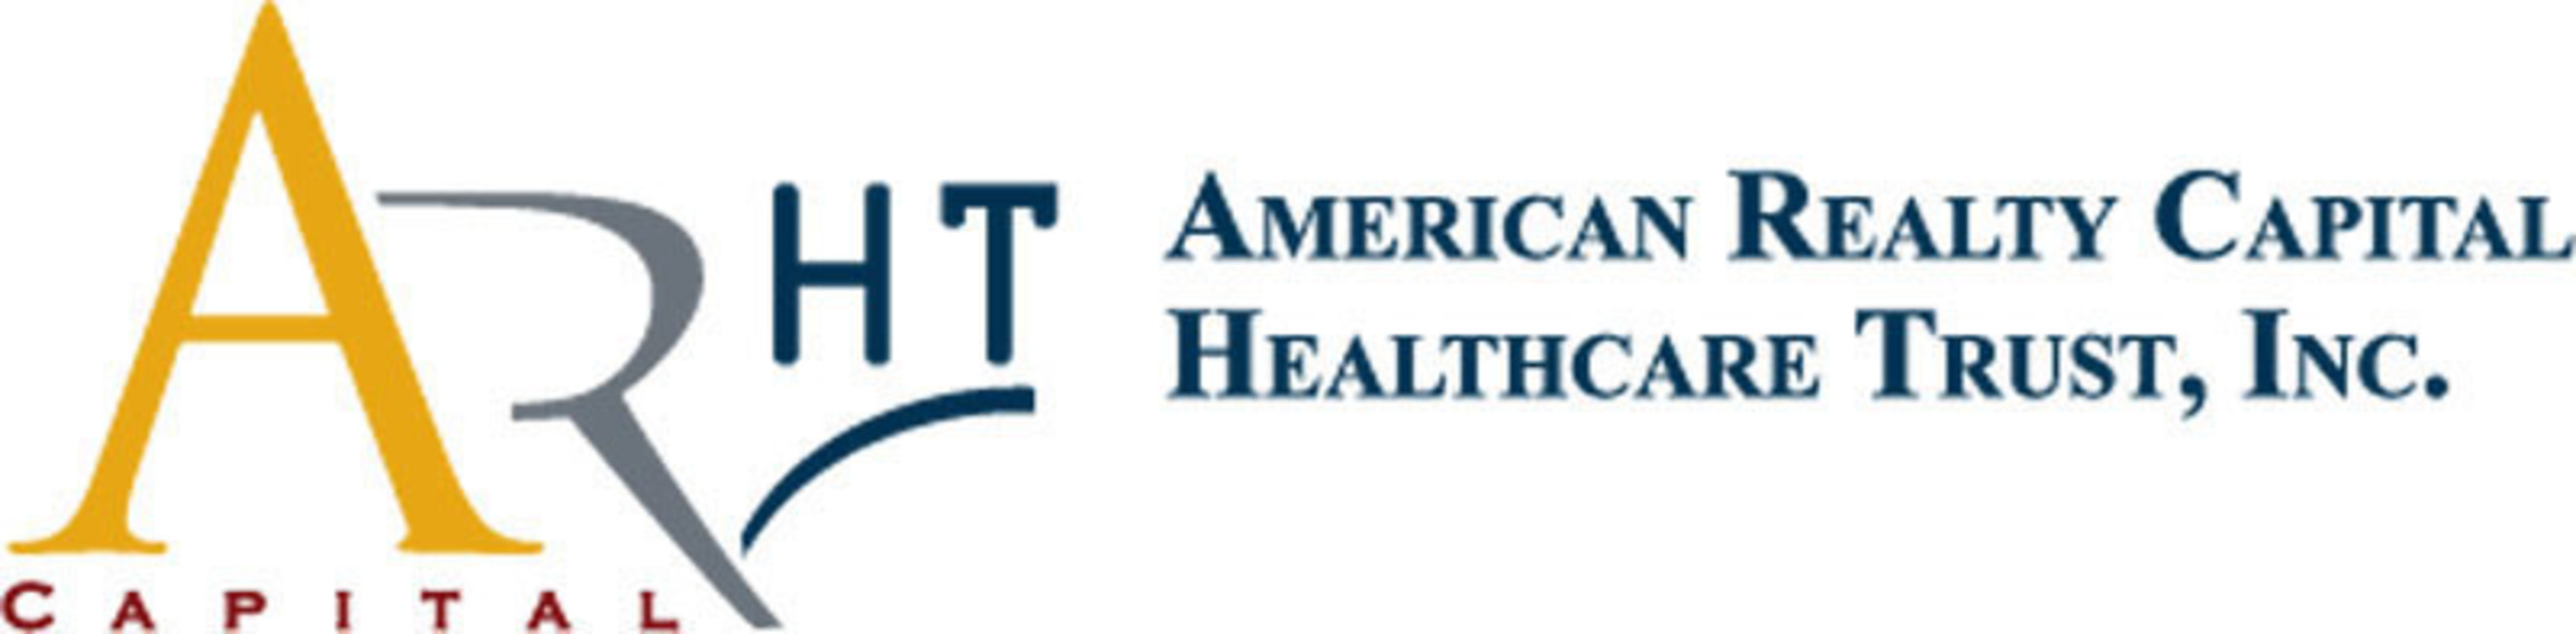 American Realty Capital Healthcare Trust, Inc.